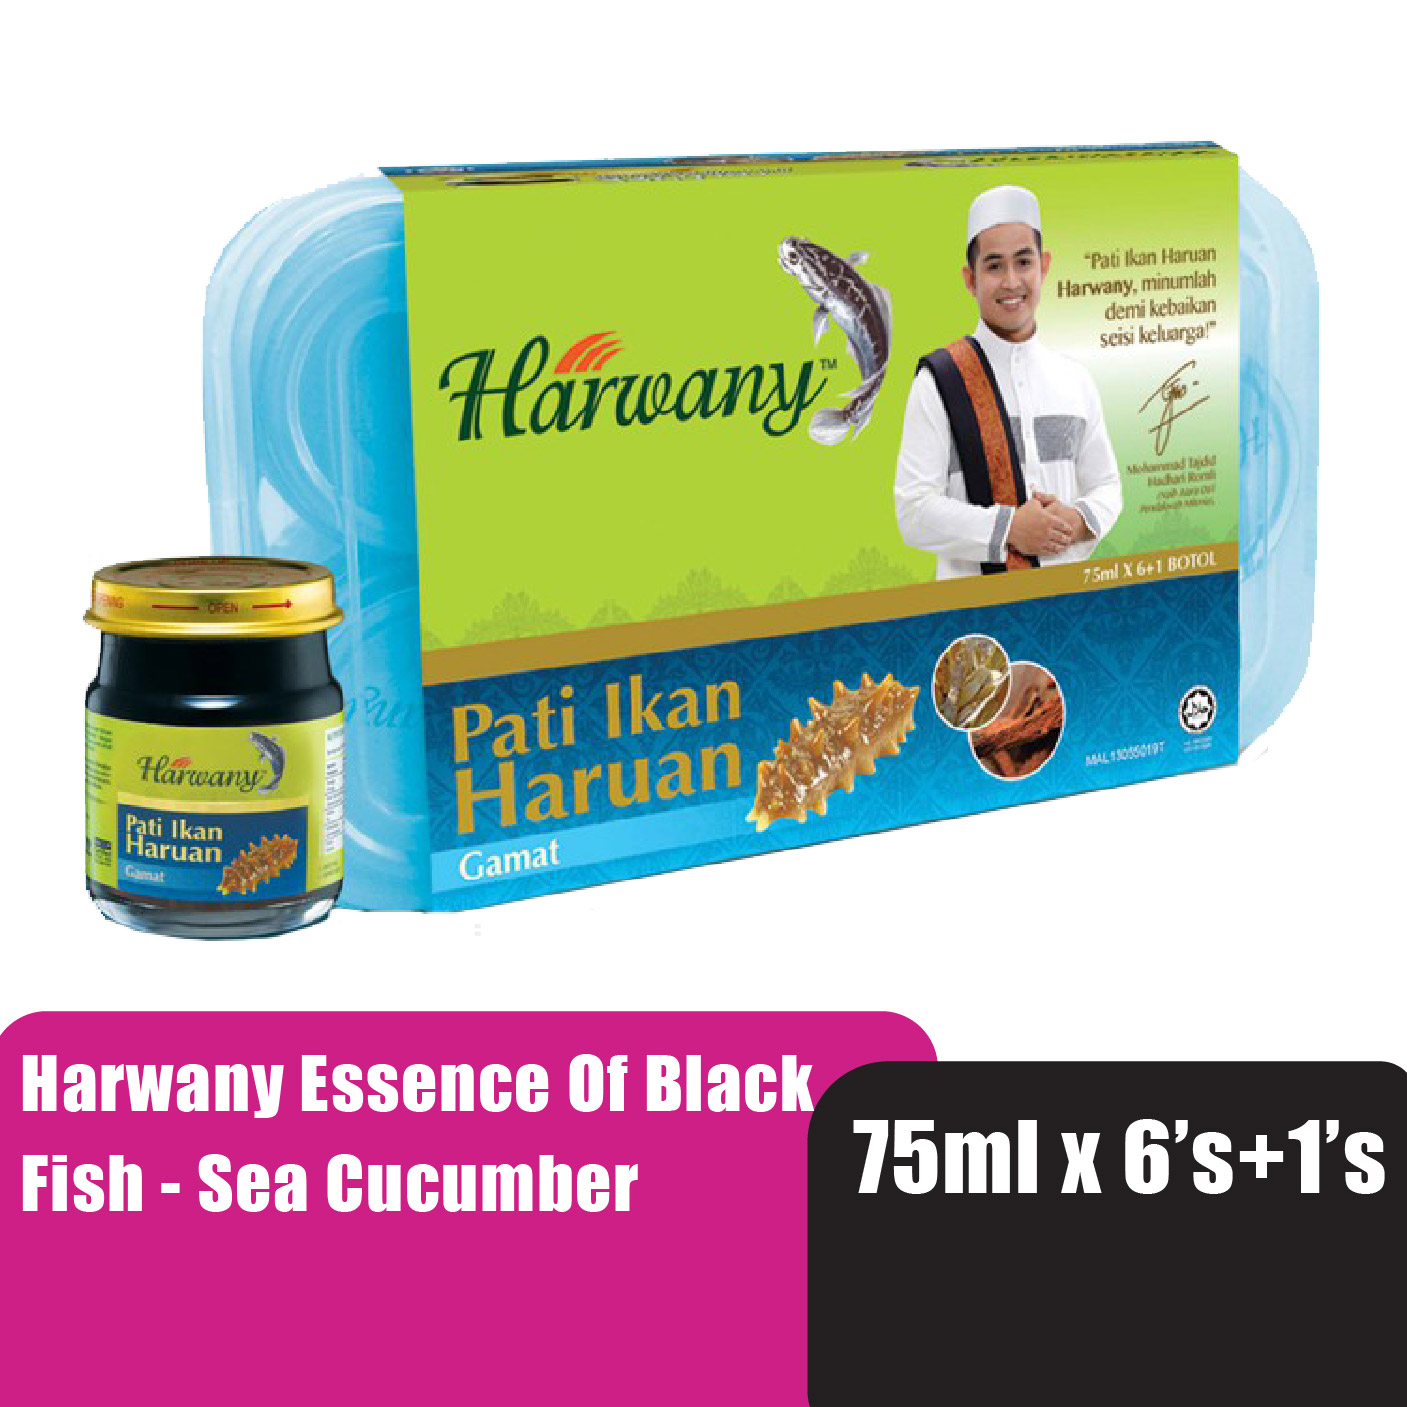 HARWANY Essence Of Black Fish Sea Cucumber Gamat 75ml X 6's + FOC 1's - Harwany Pati Ikan Haruan Asli / Pati Ikan Haruan